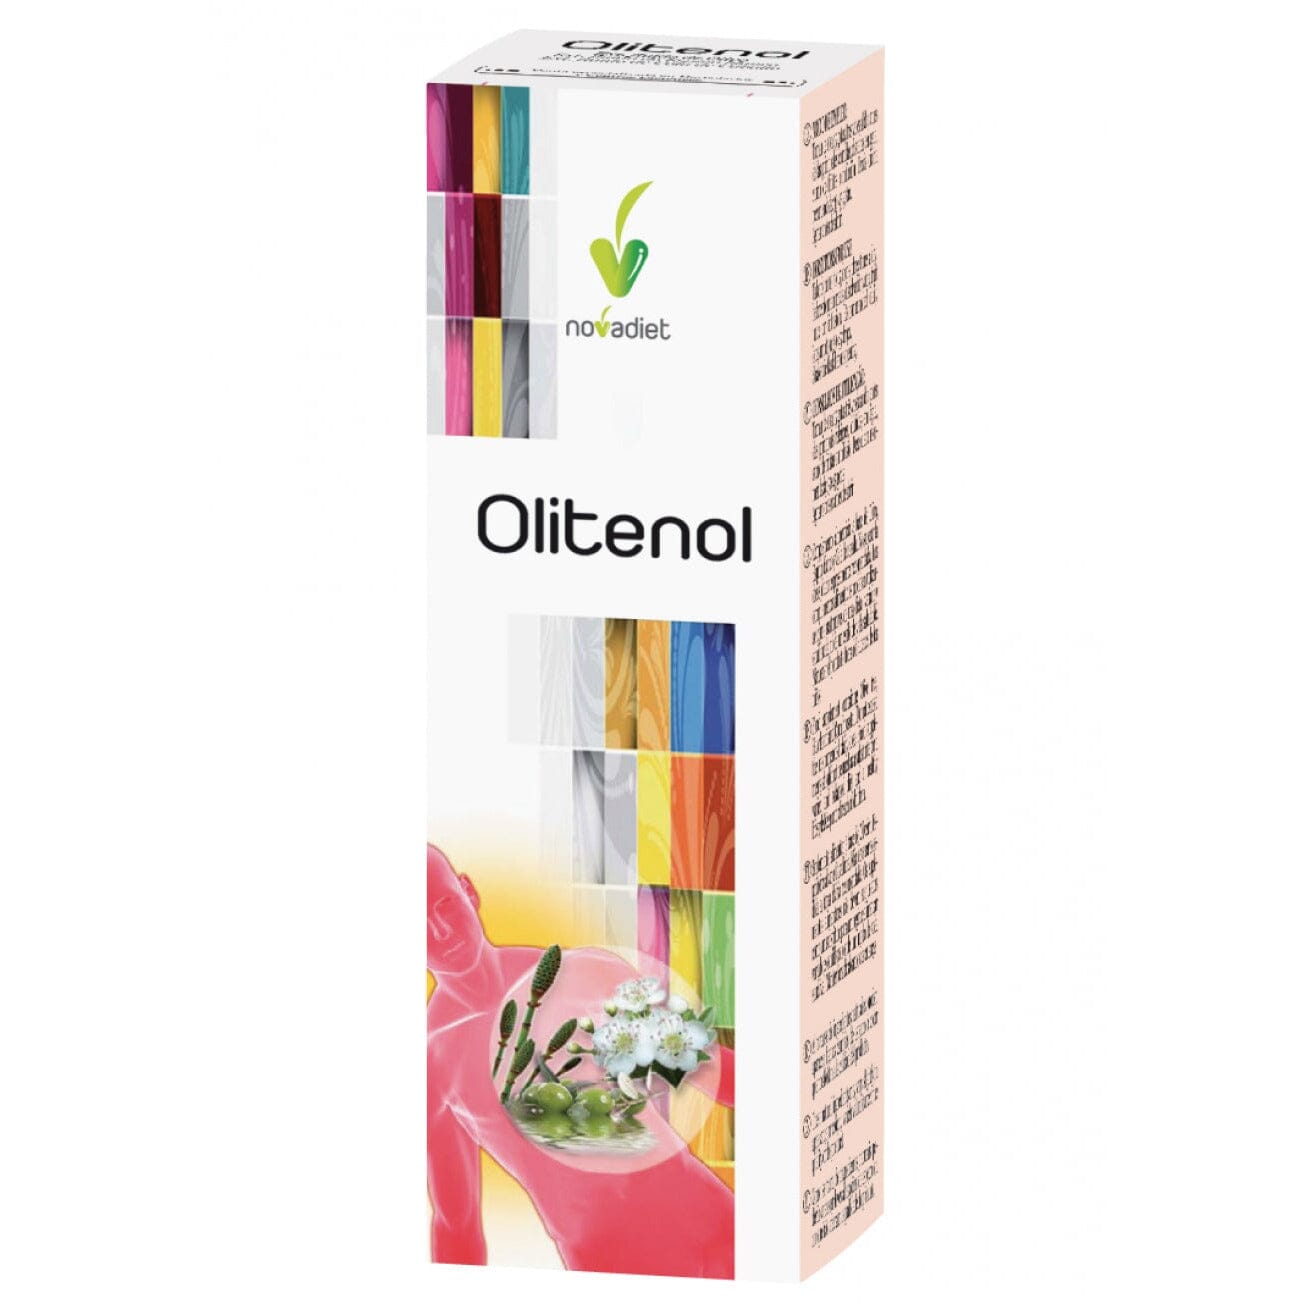 Olitenol 30 ml | Novadiet - Dietetica Ferrer